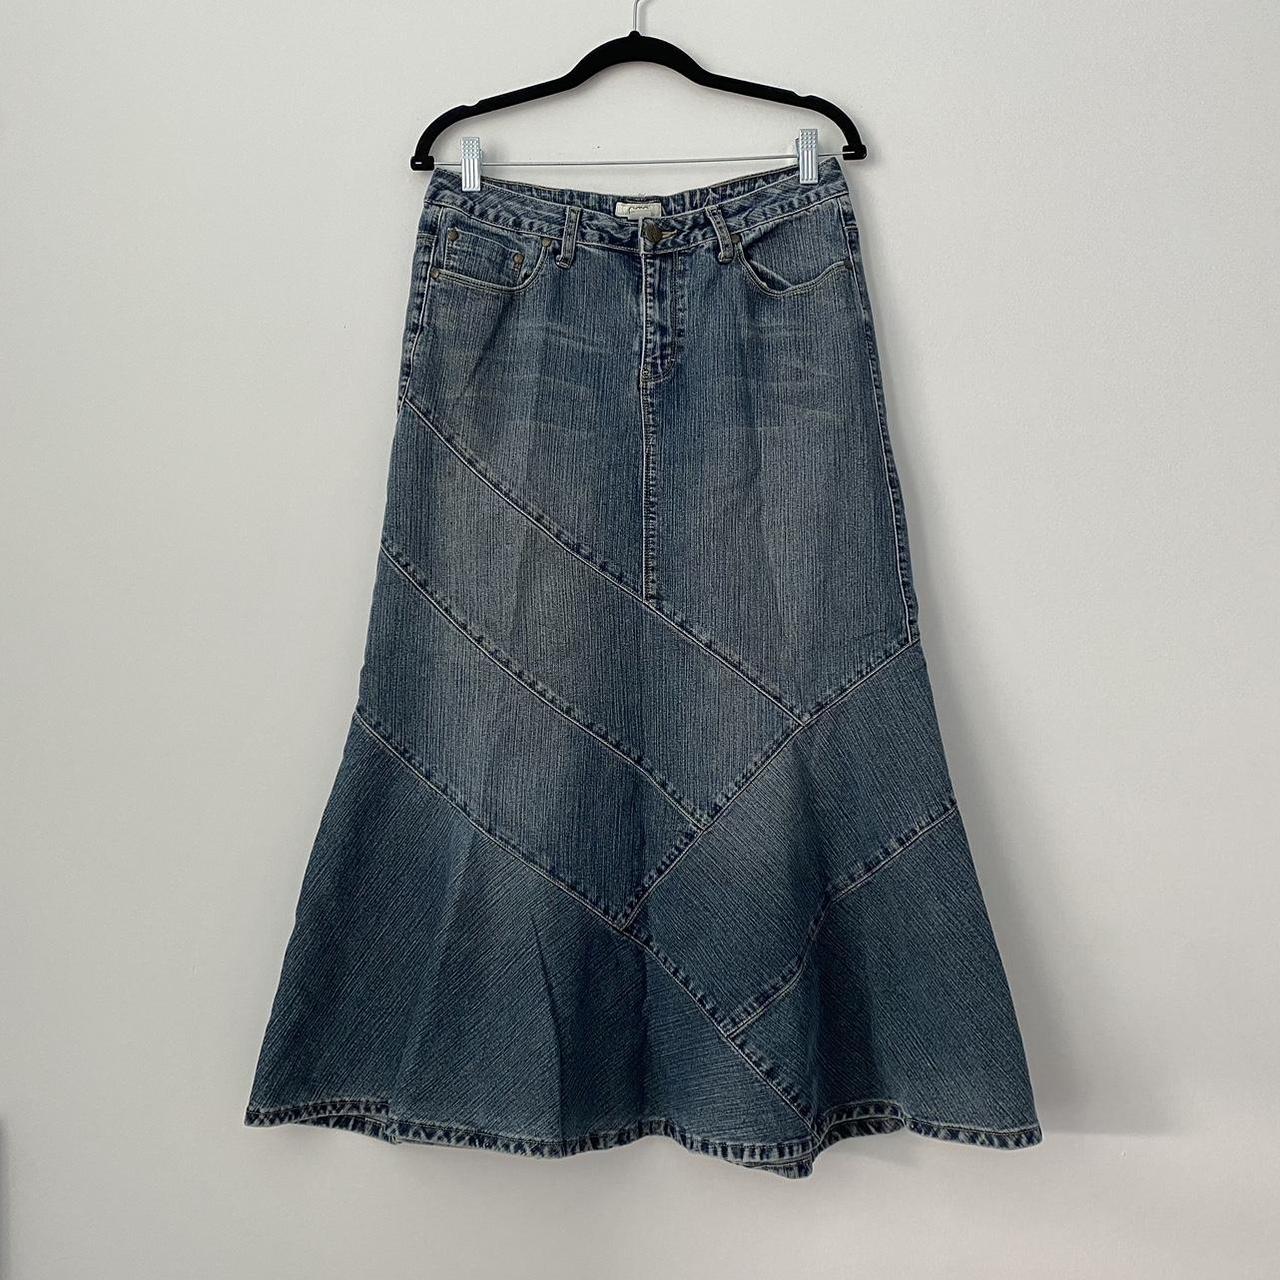 Cato Women's Blue and Navy Skirt